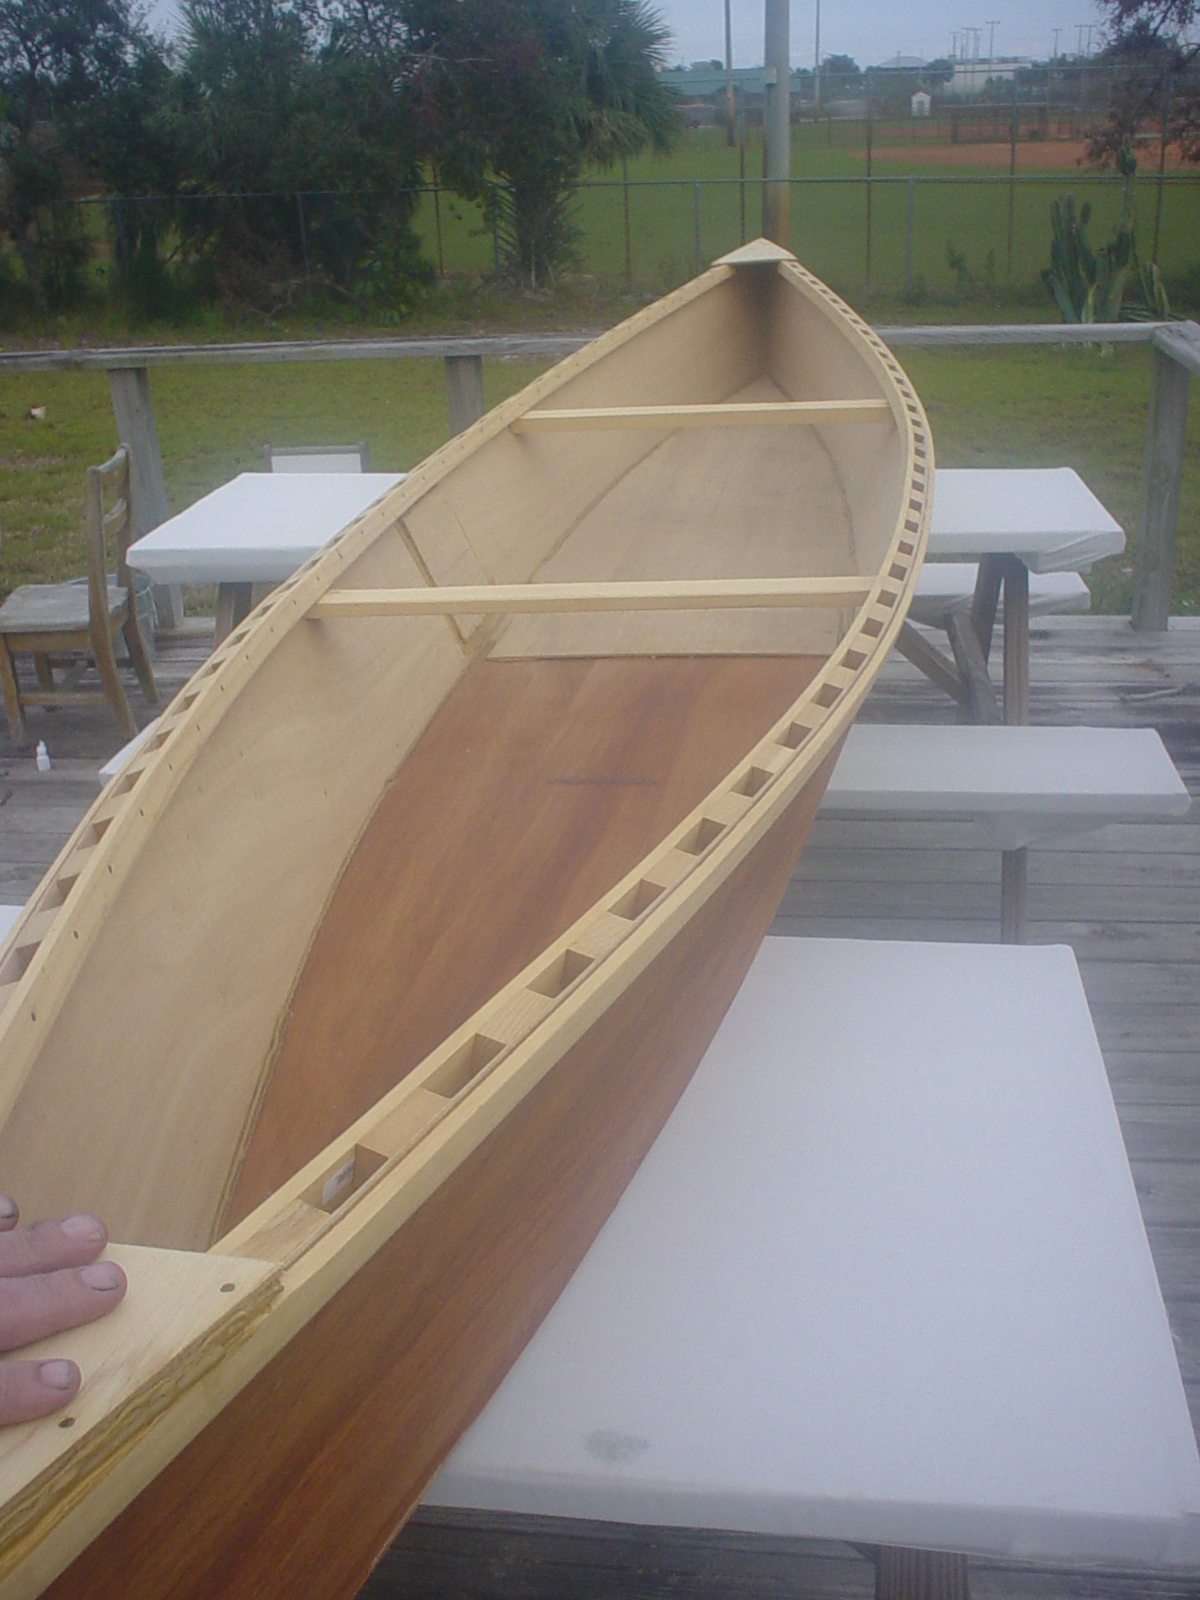 revisiting an old friend – home built wooden pirogue